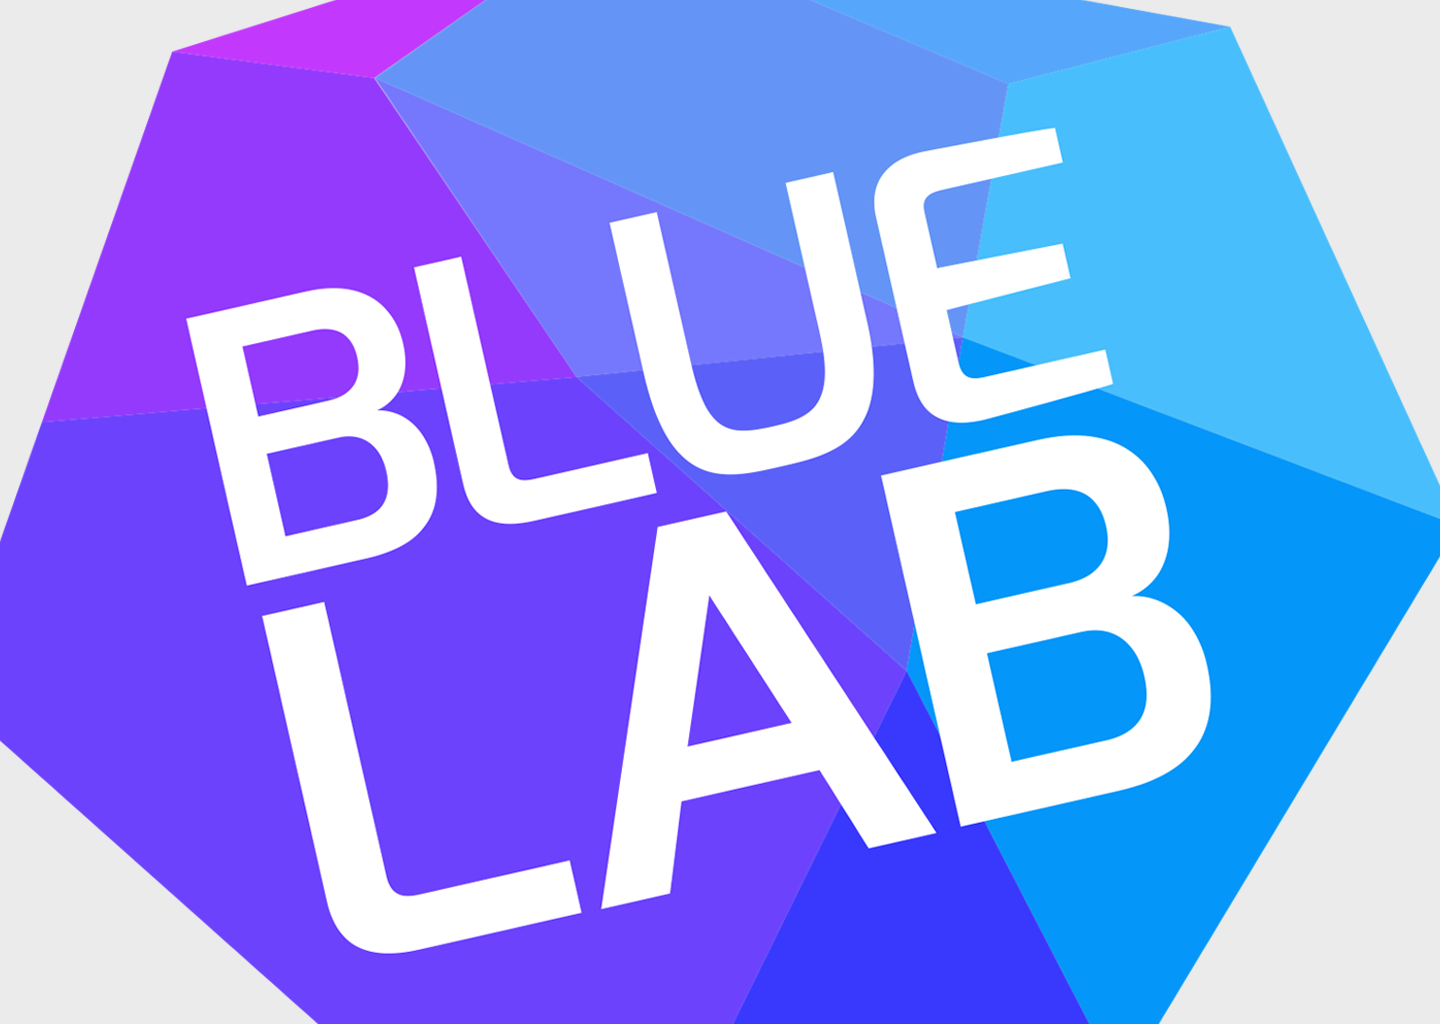 Blue Lab